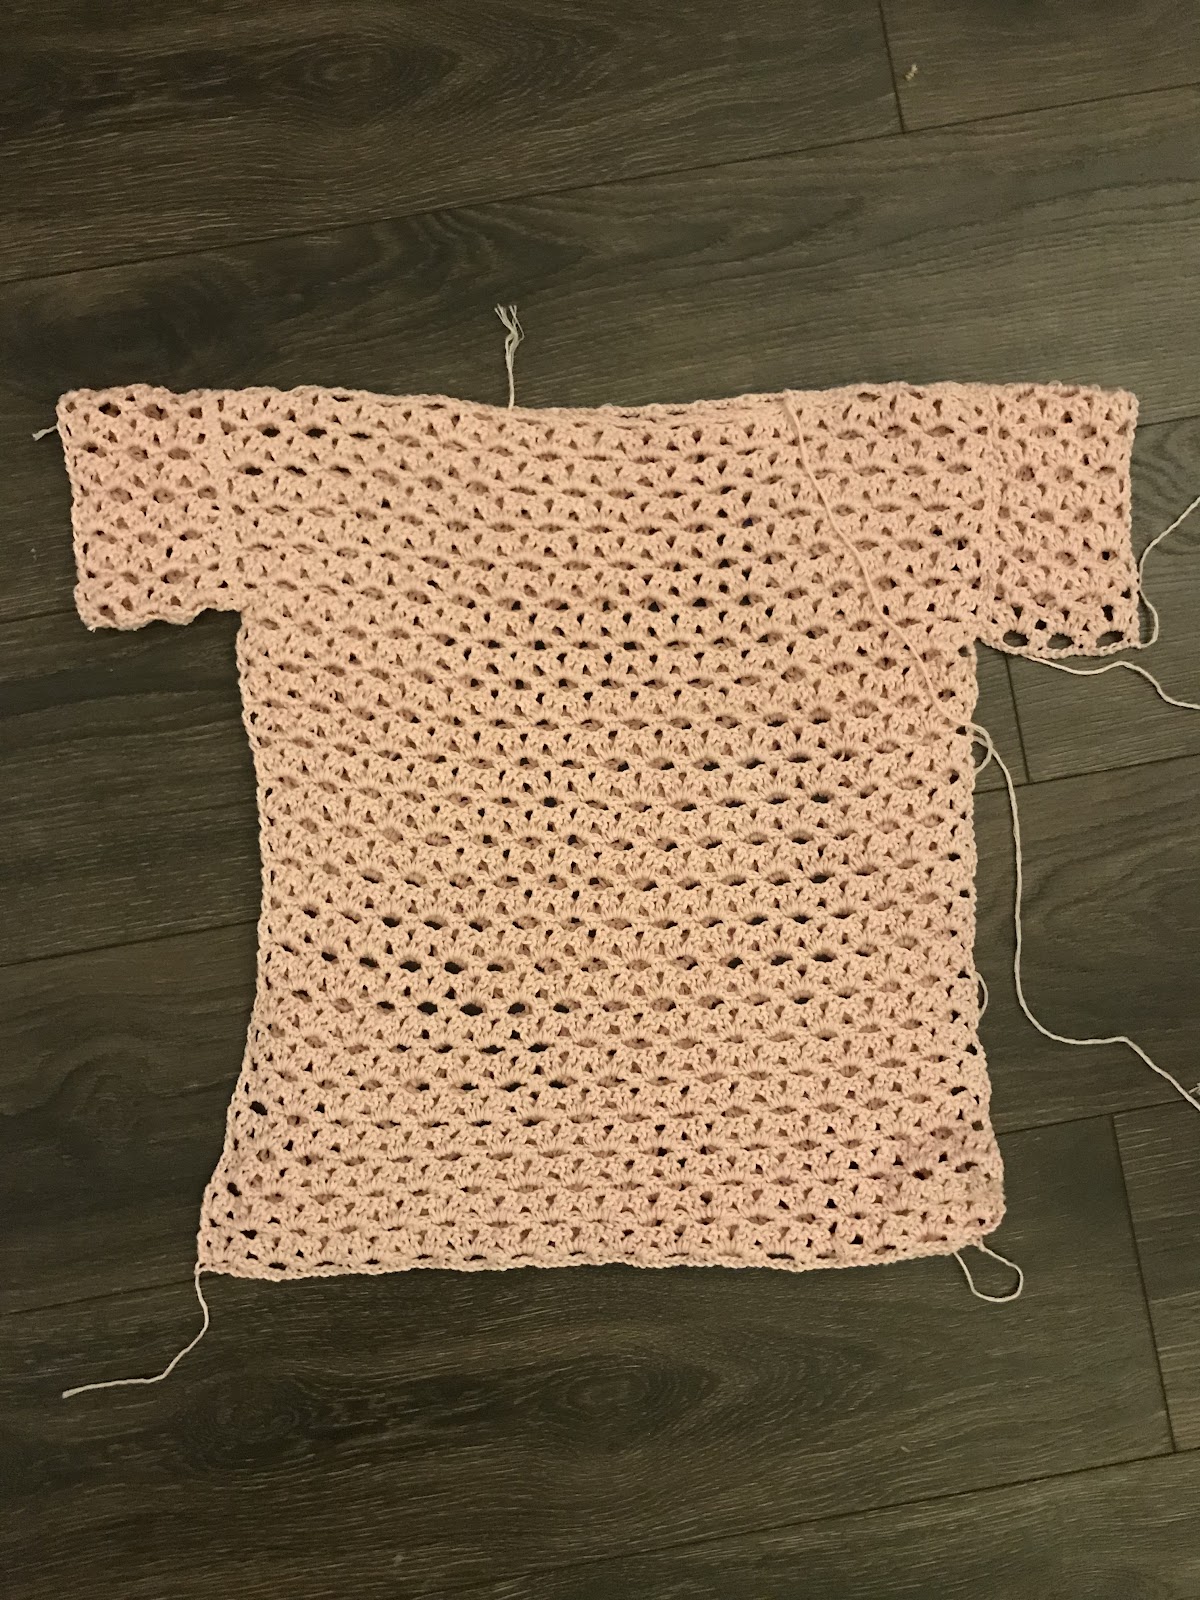 Kaycee Tunic crochet pattern sewing together